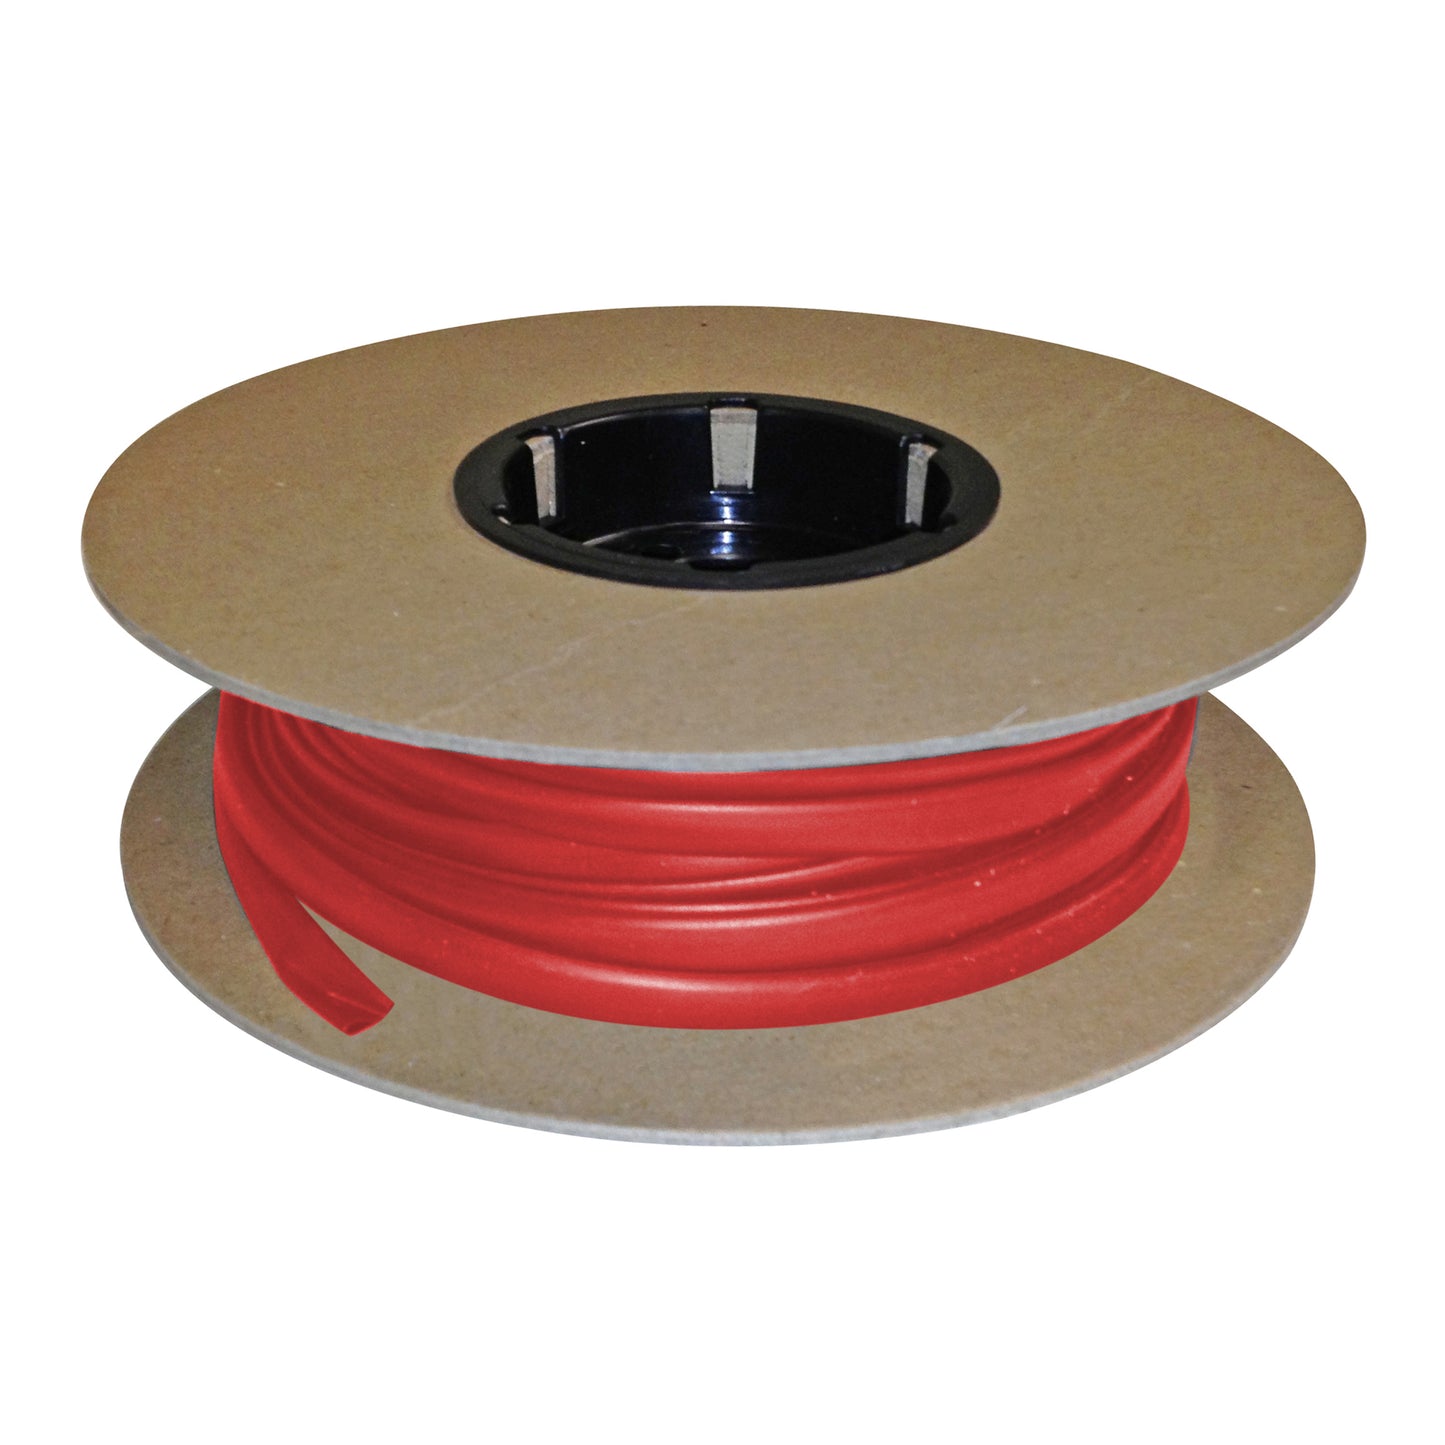 Flexible Thin Single Wall Non-Adhesive Heat Shrink Tubing 2:1 Red 3/4" ID - 25' Ft Spool